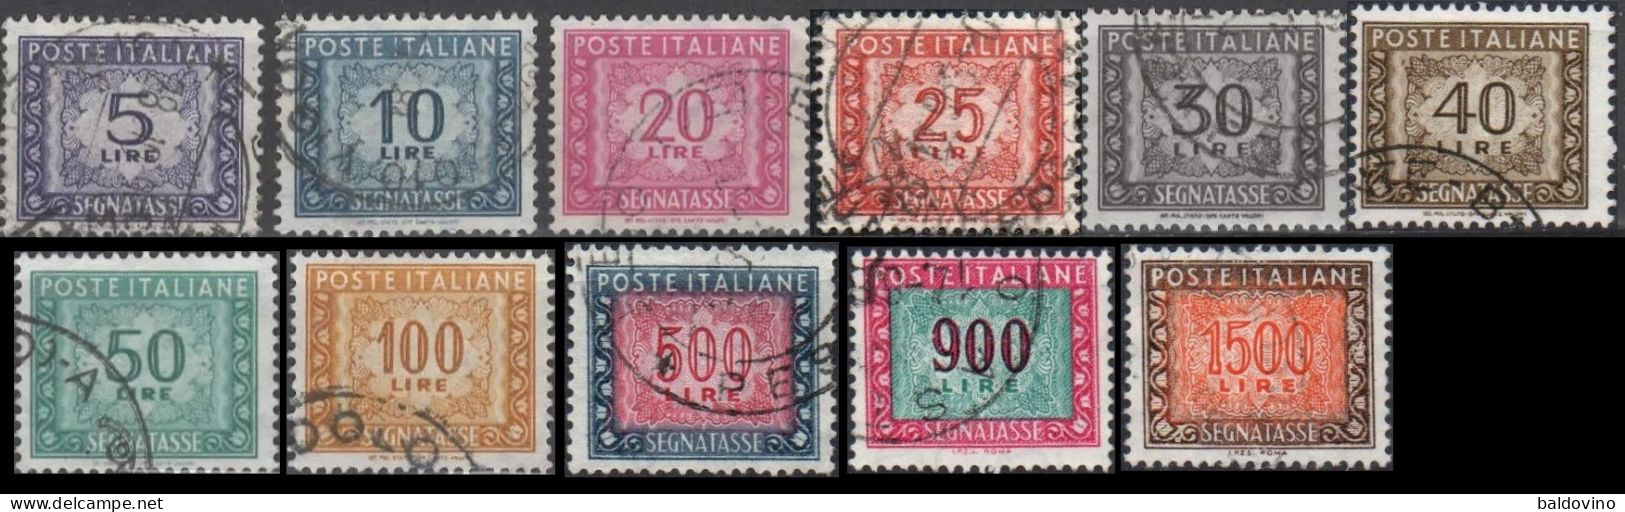 Italia 1955/1991 Segnatasse Fil. Stelle 11 Valori - Postage Due